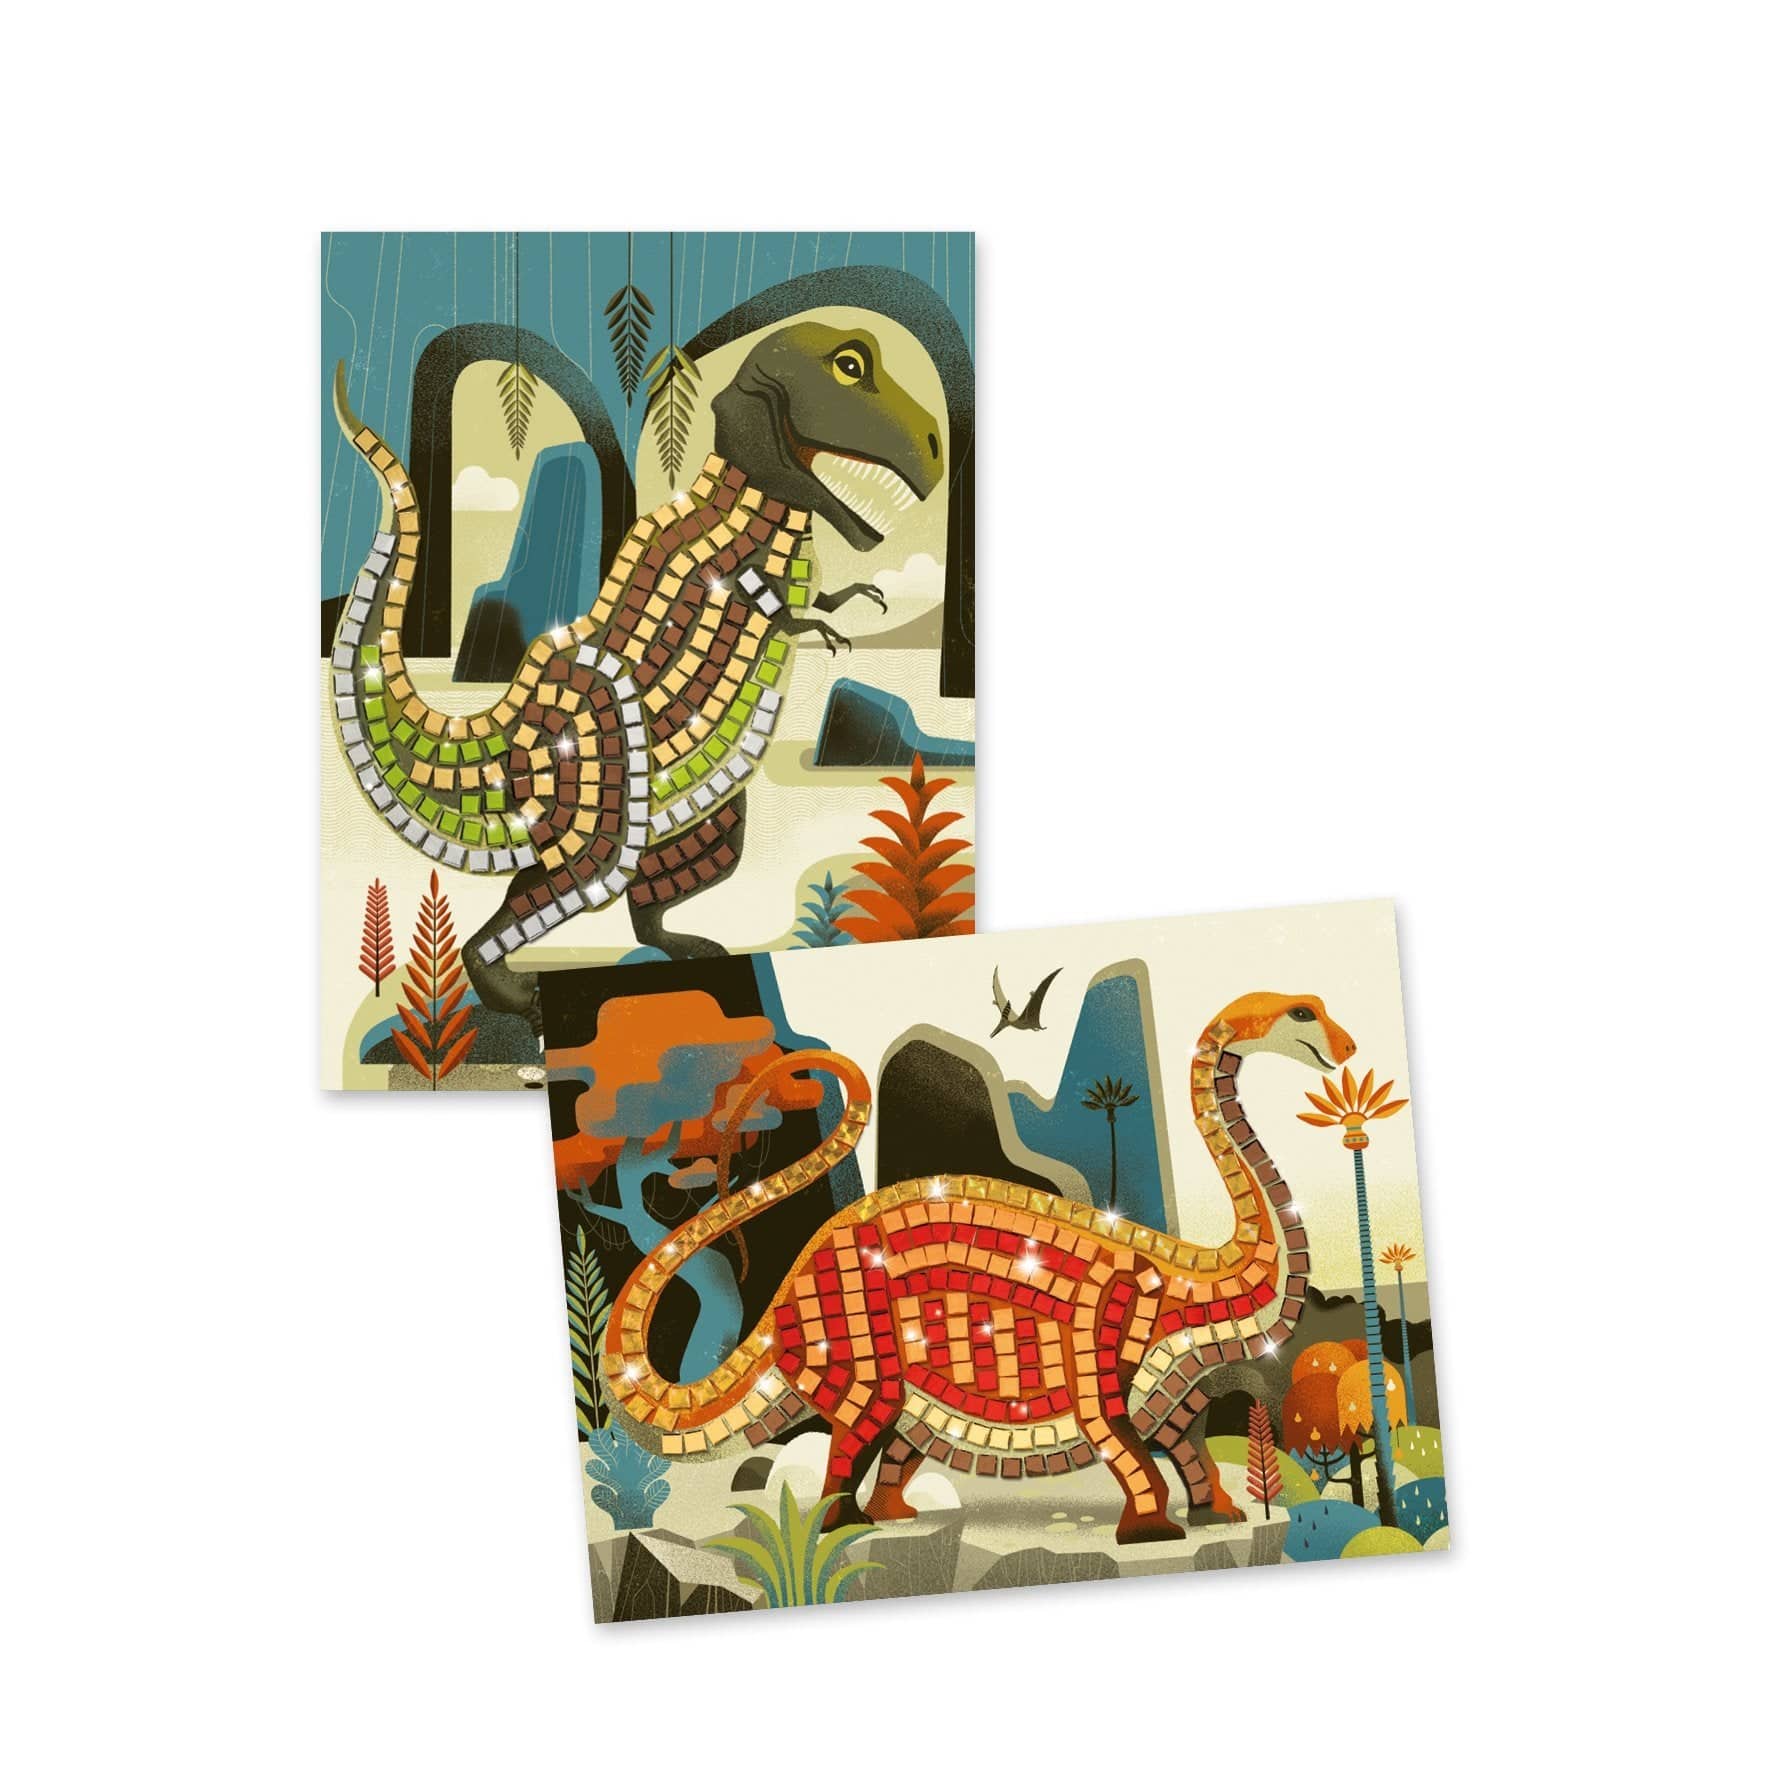 Dinosaurs Sticker Mosaic Craft Kit Djeco Lil Tulips